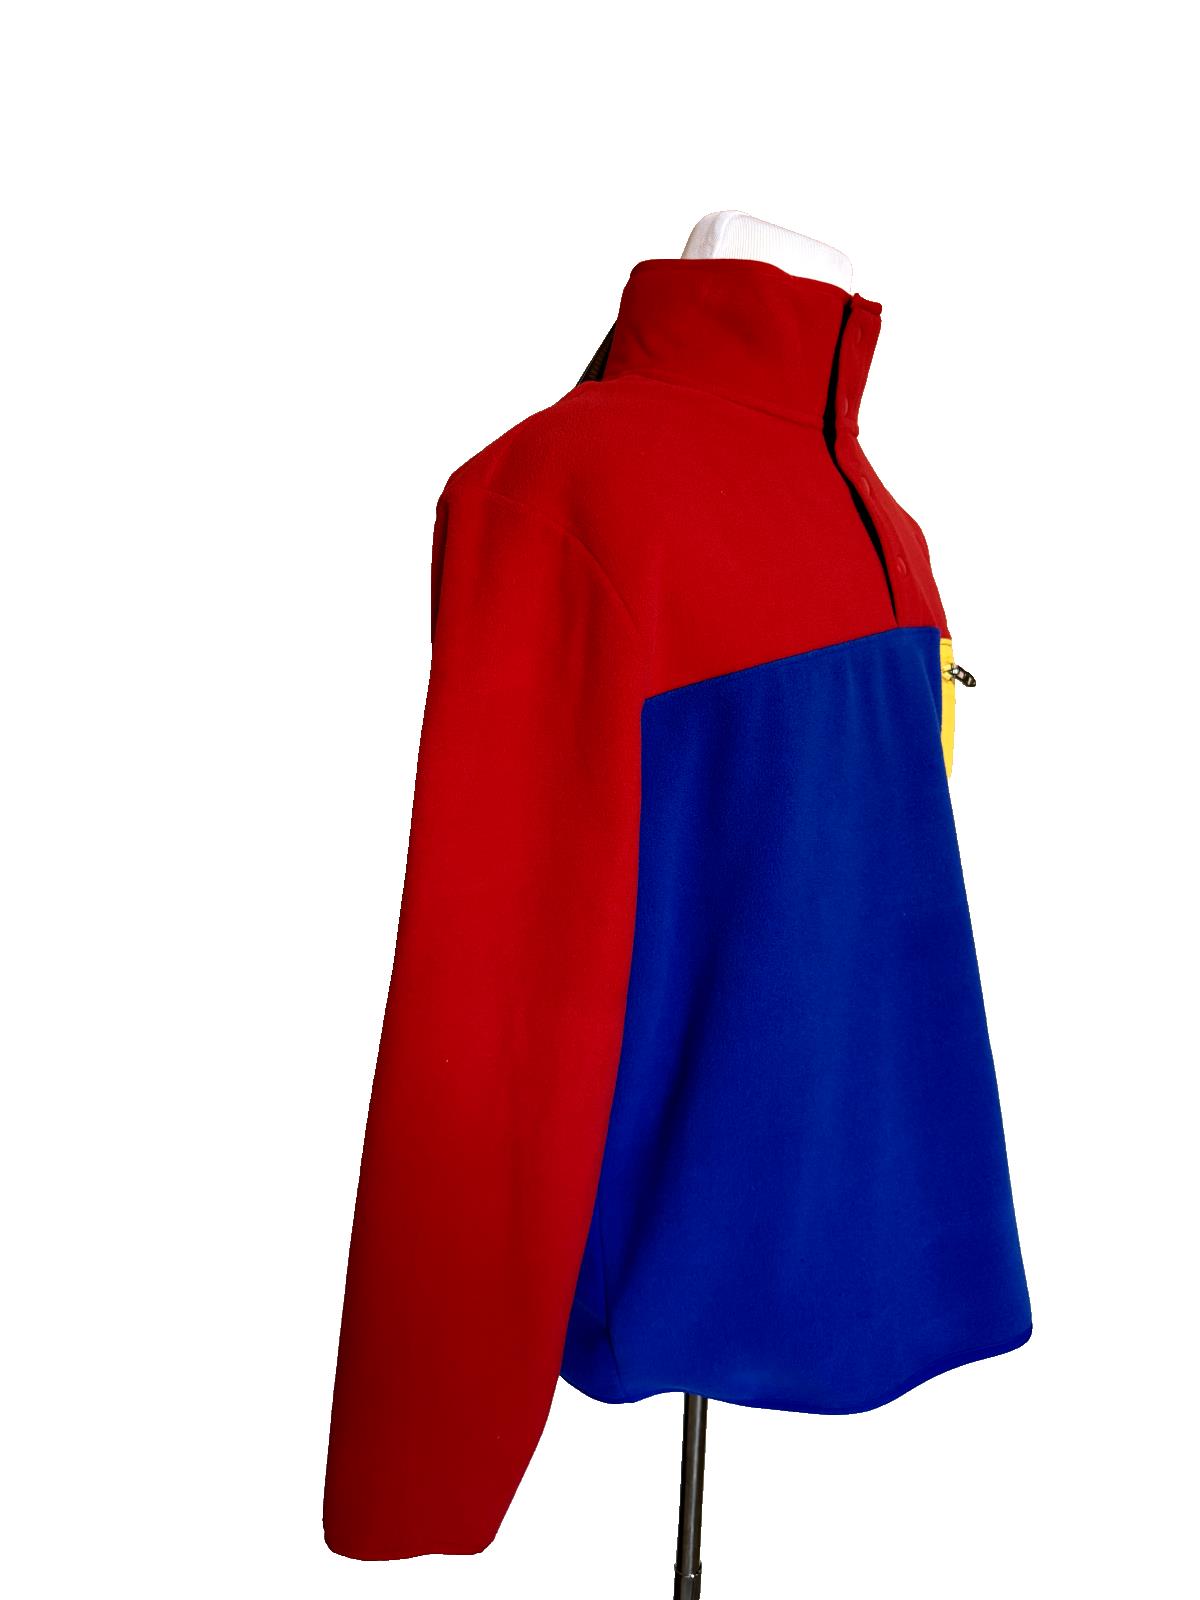 NWT$198 Polo Ralph Lauren Bear Fleece Sweatshirt Colorblock Red/Blue/Yellow L